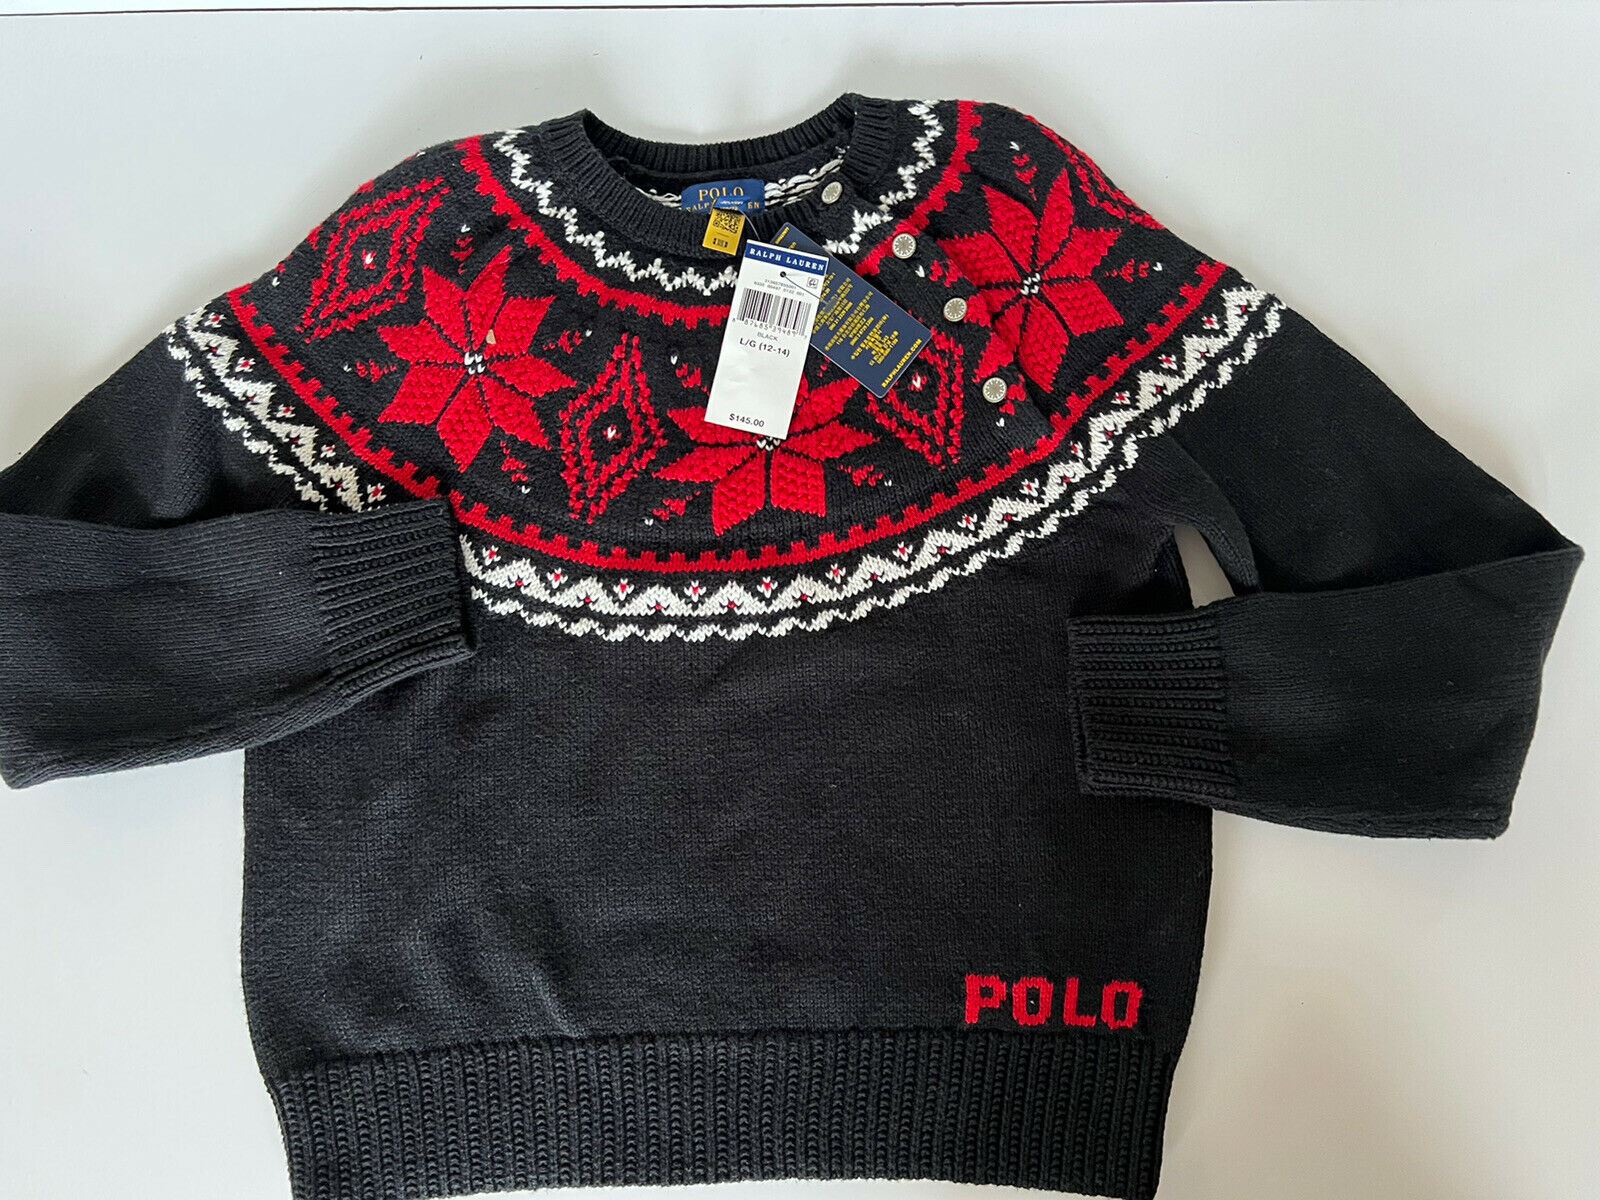 NWT $145 Polo Ralph Lauren Girls Black Let it Snow Cotton Sweater Size L (12-14)